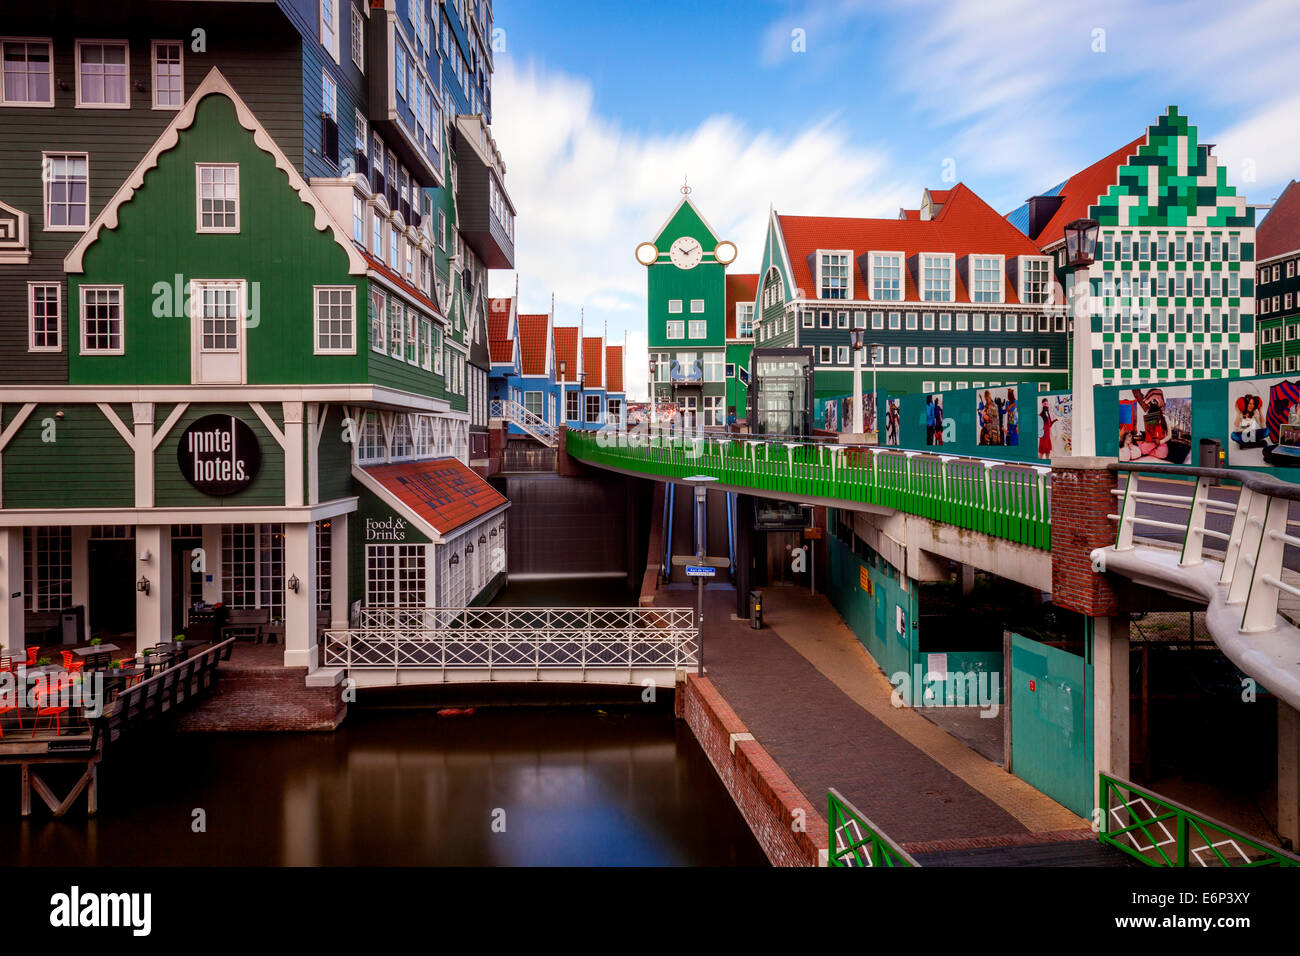 Geniet minimum Geladen The Inntel Hotel and Colourful Buildings, Zaandam, Amsterdam, Holland Stock  Photo - Alamy